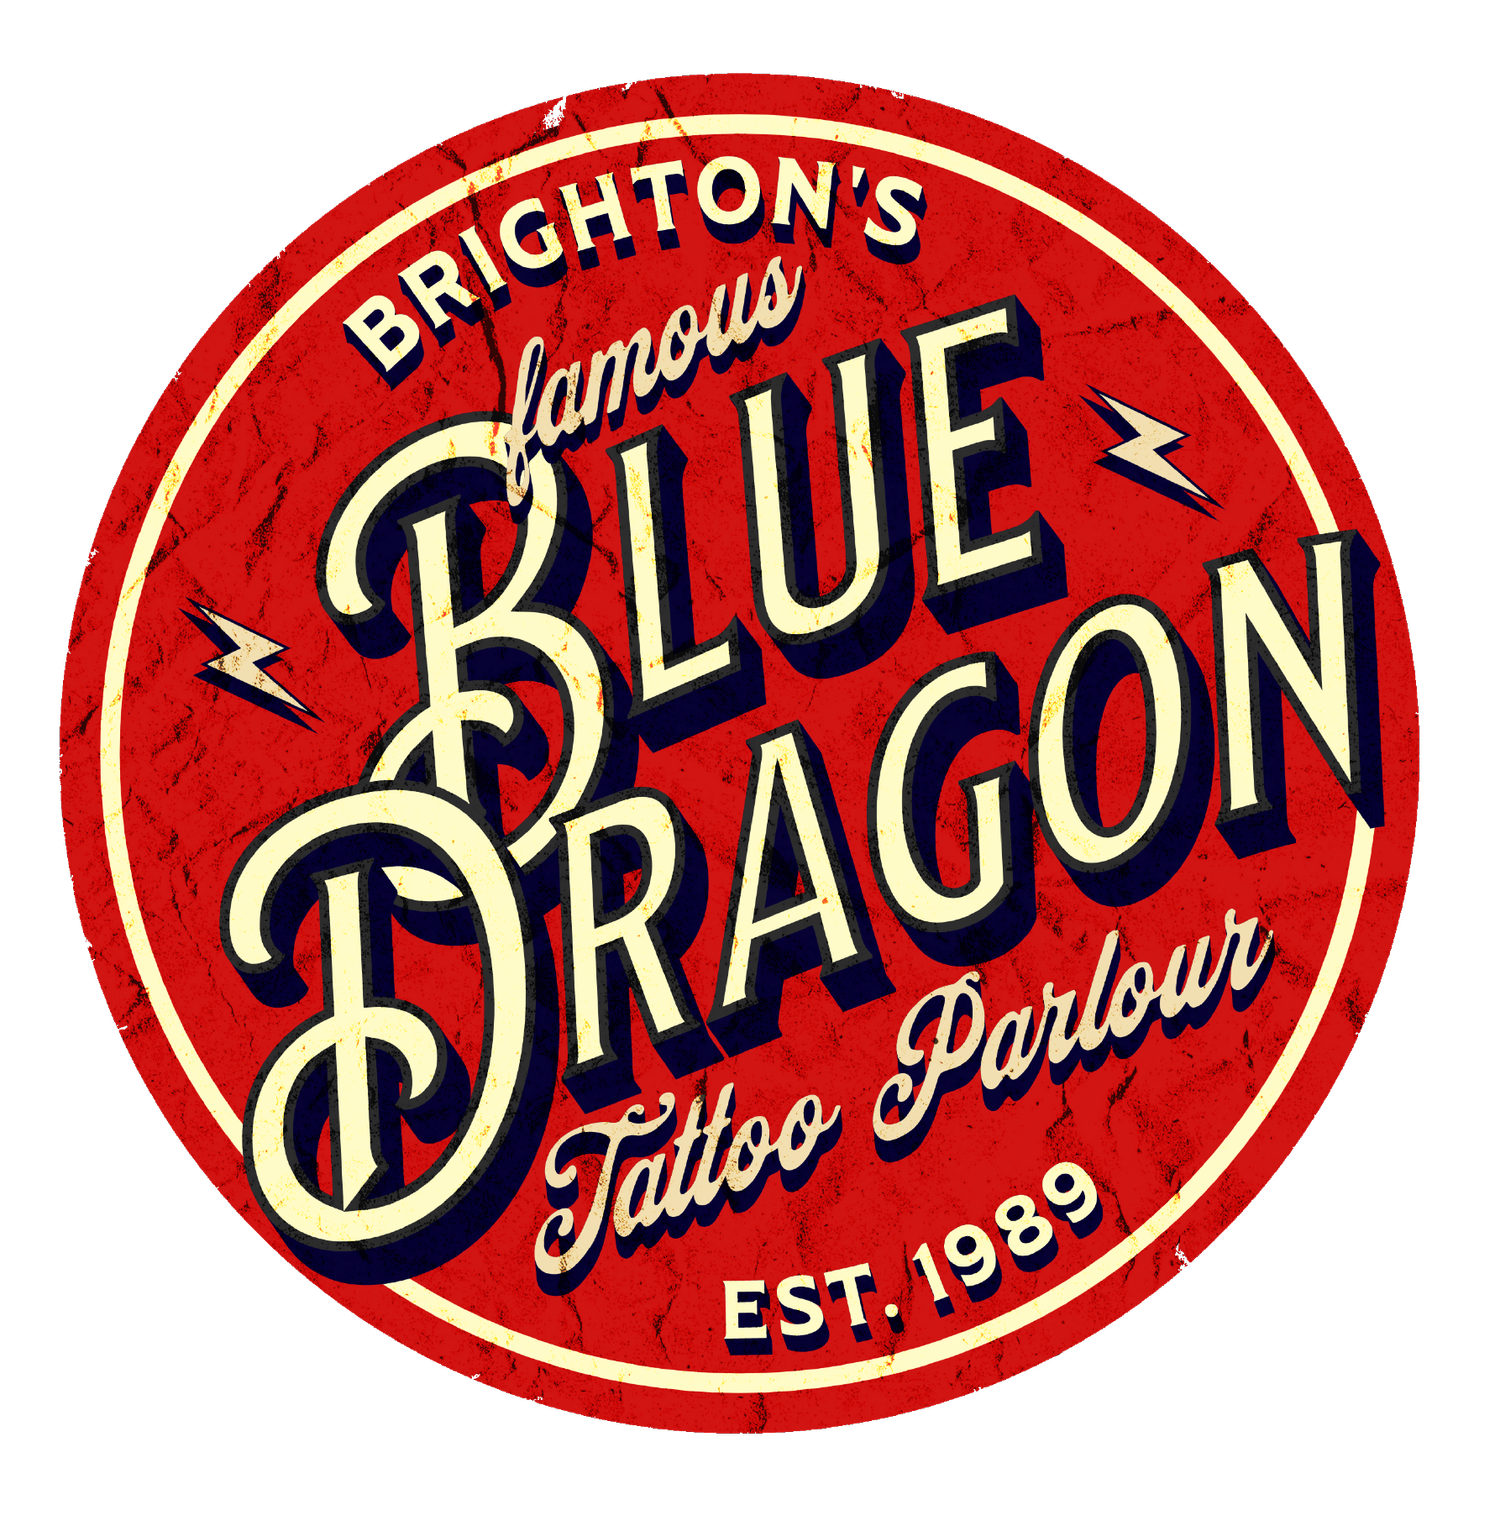 Blue Dragon Tattoo Studio Brighton